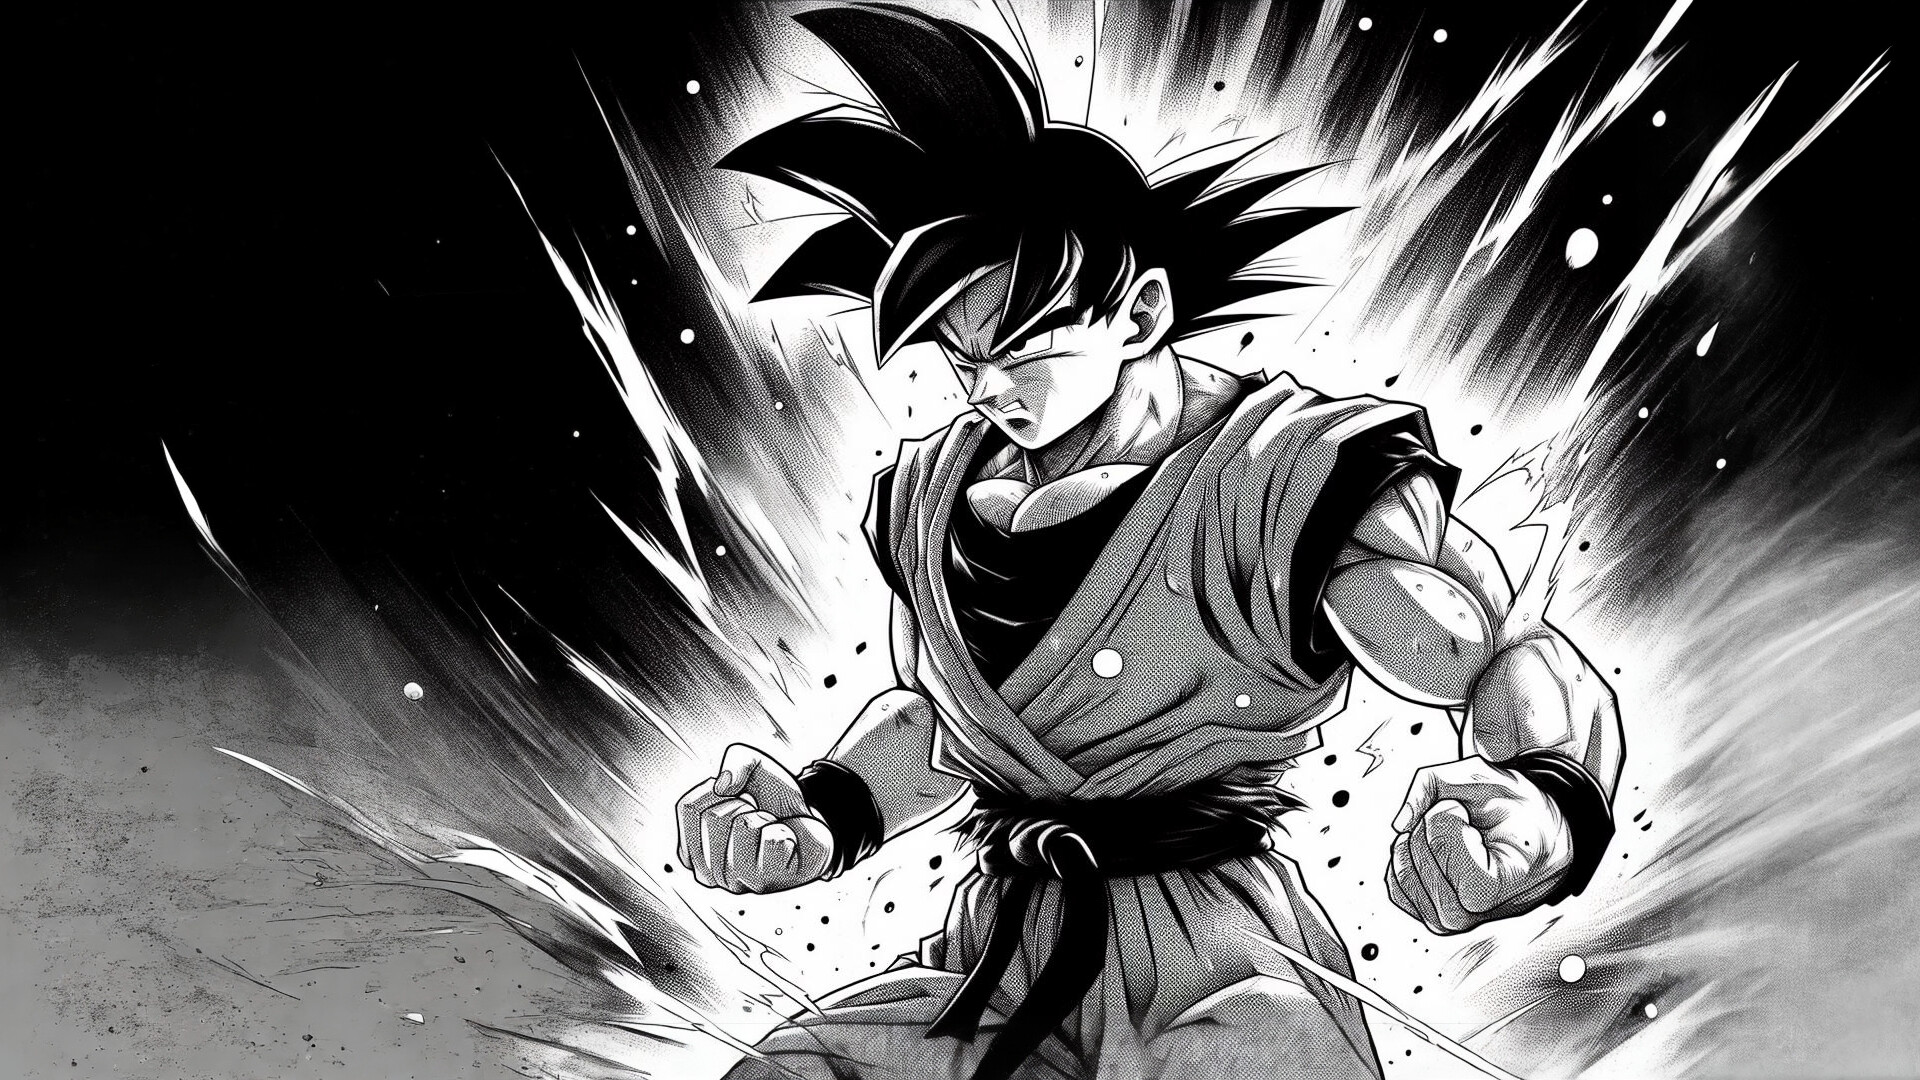 ArtStation - Wallpaper Theme #1: Anime - Son Goku